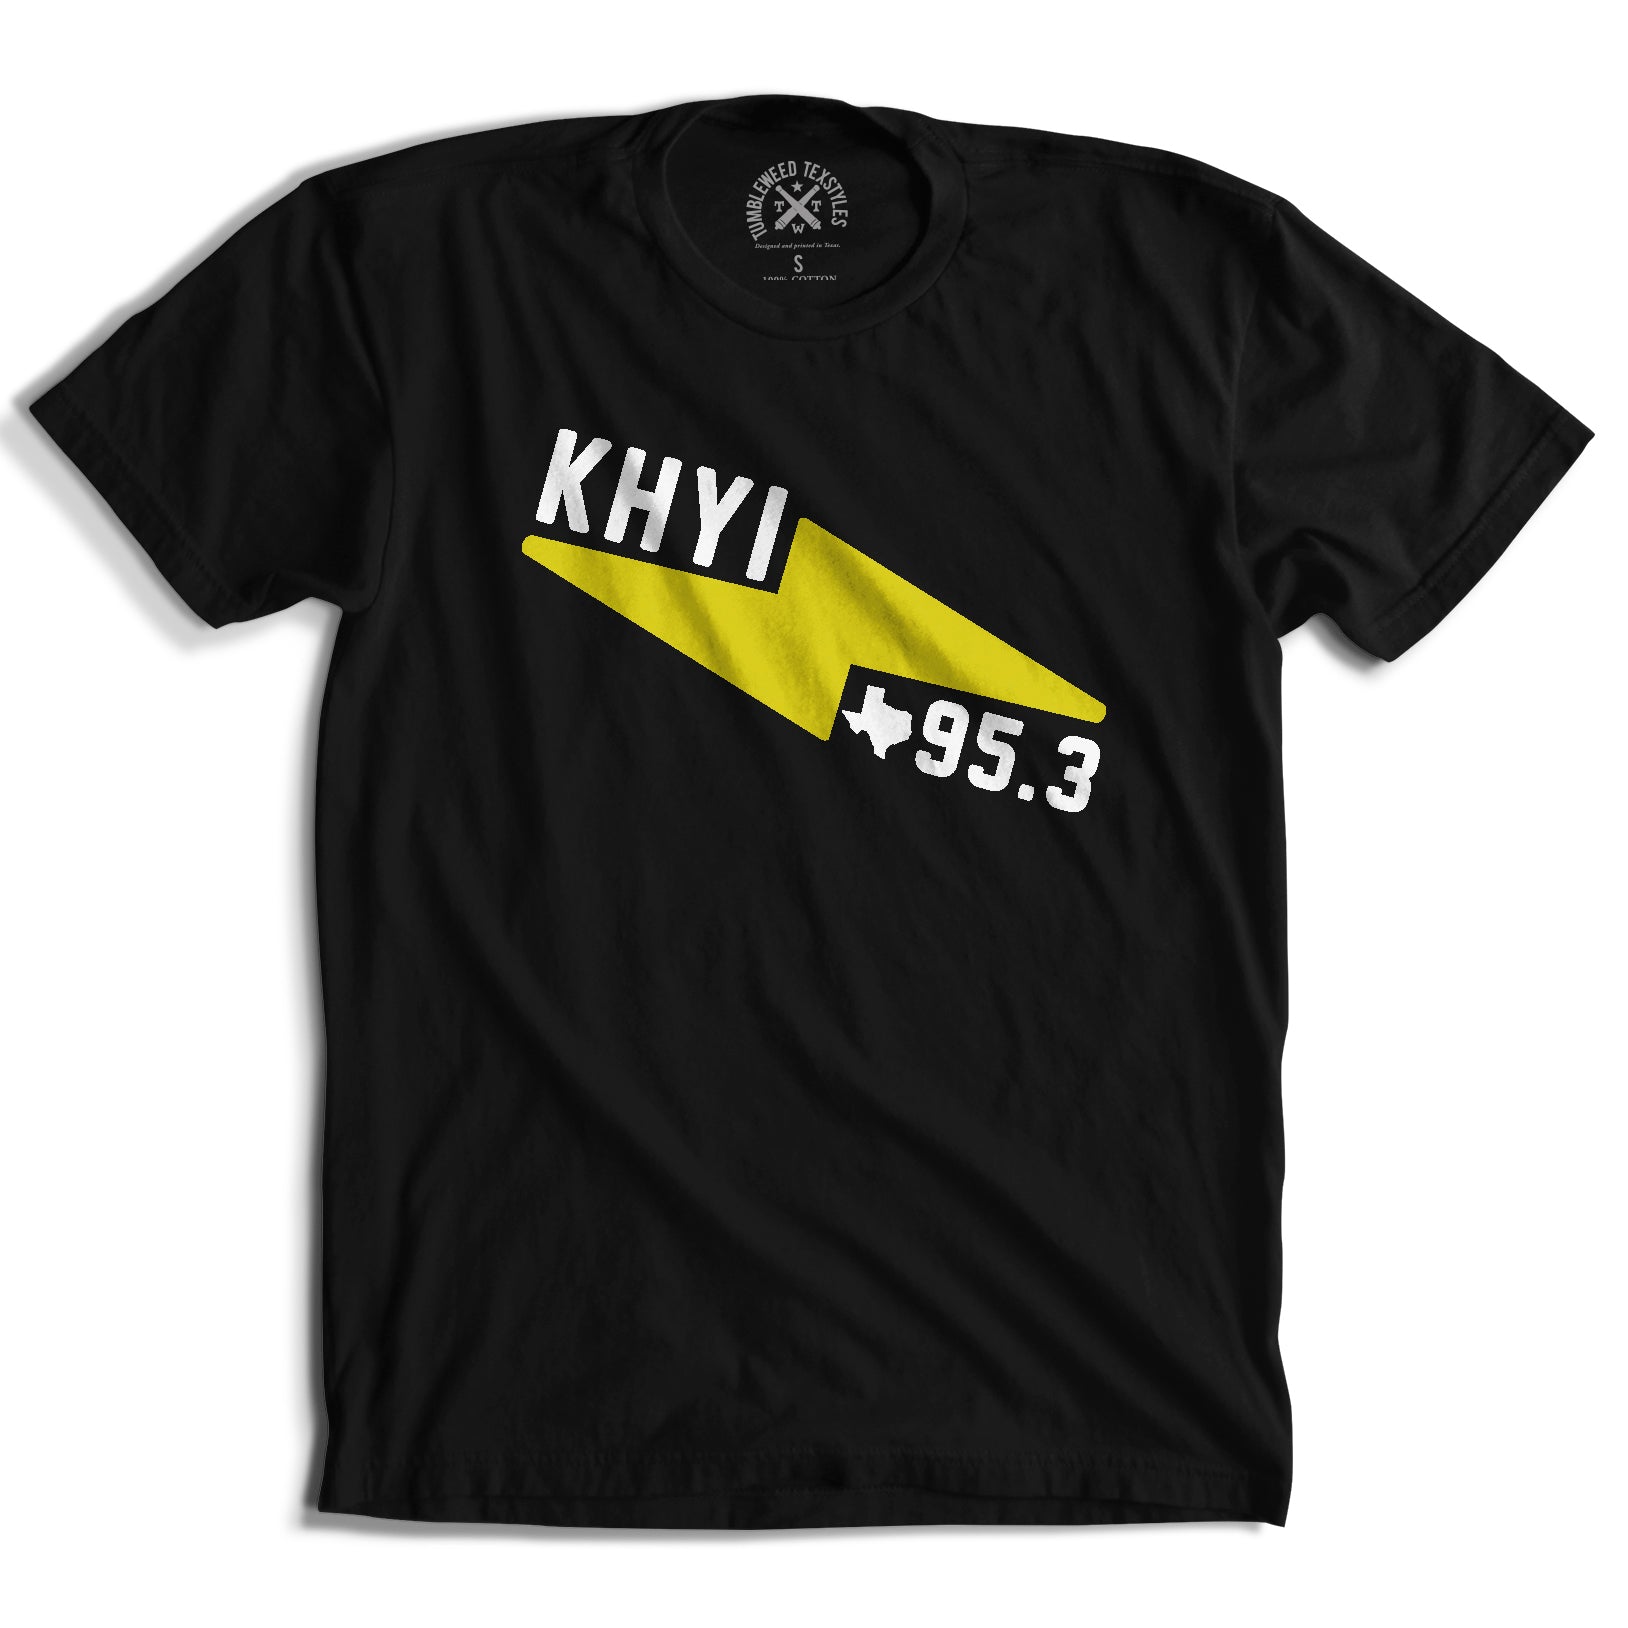 95.3 KHYI "The Range" Bolt T-Shirt (Black)